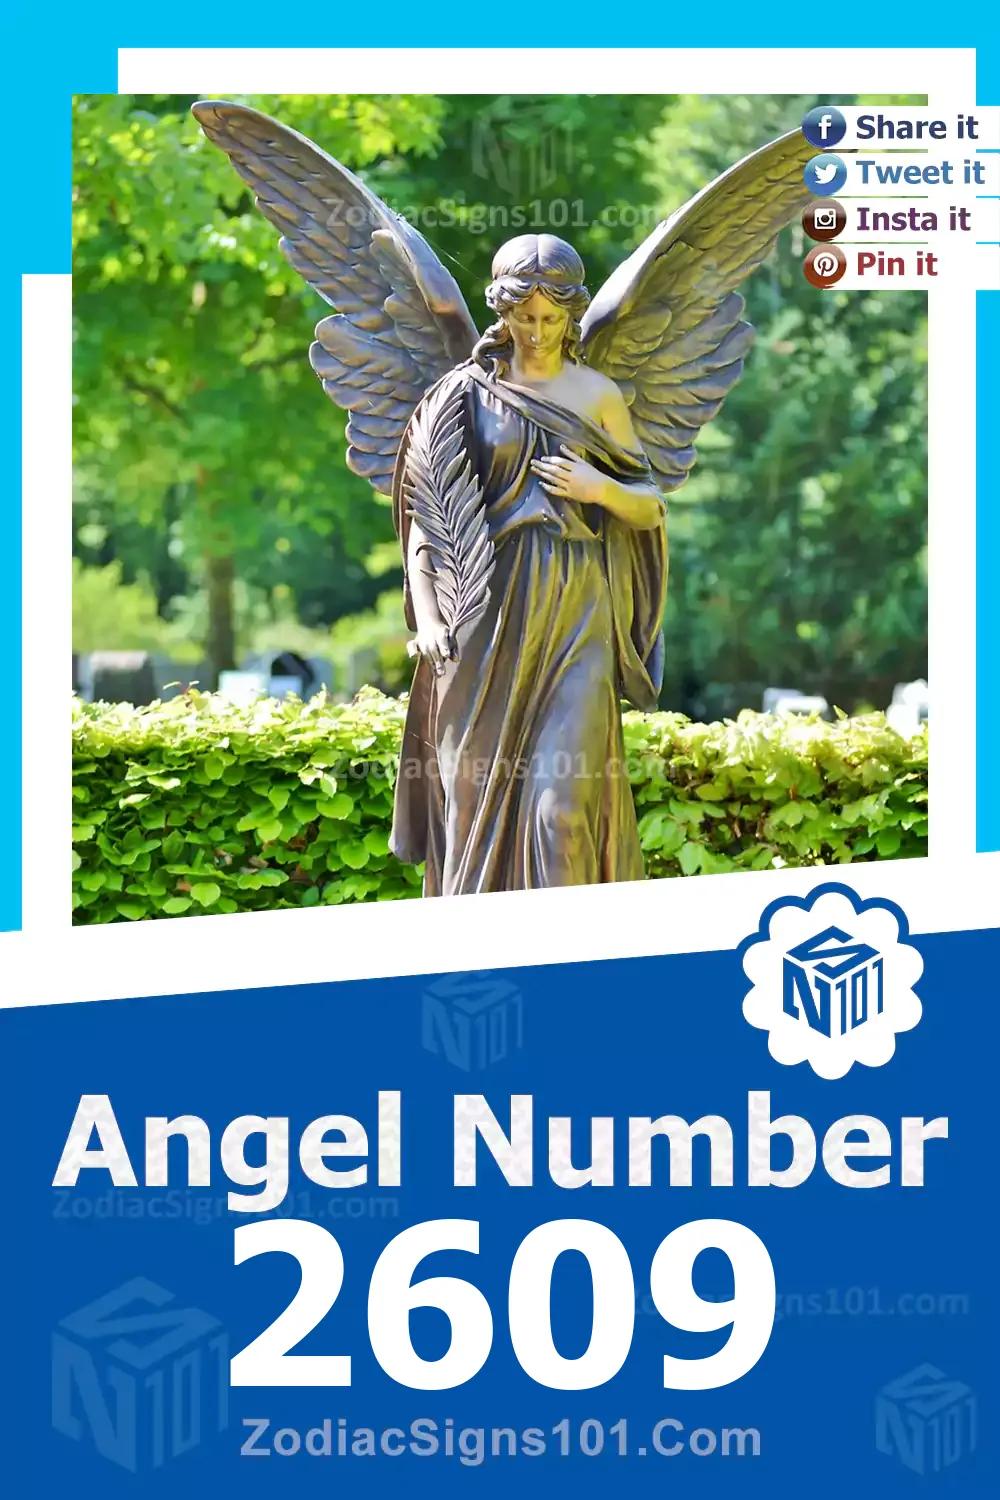 2609-Angel-Number-Meaning.jpg